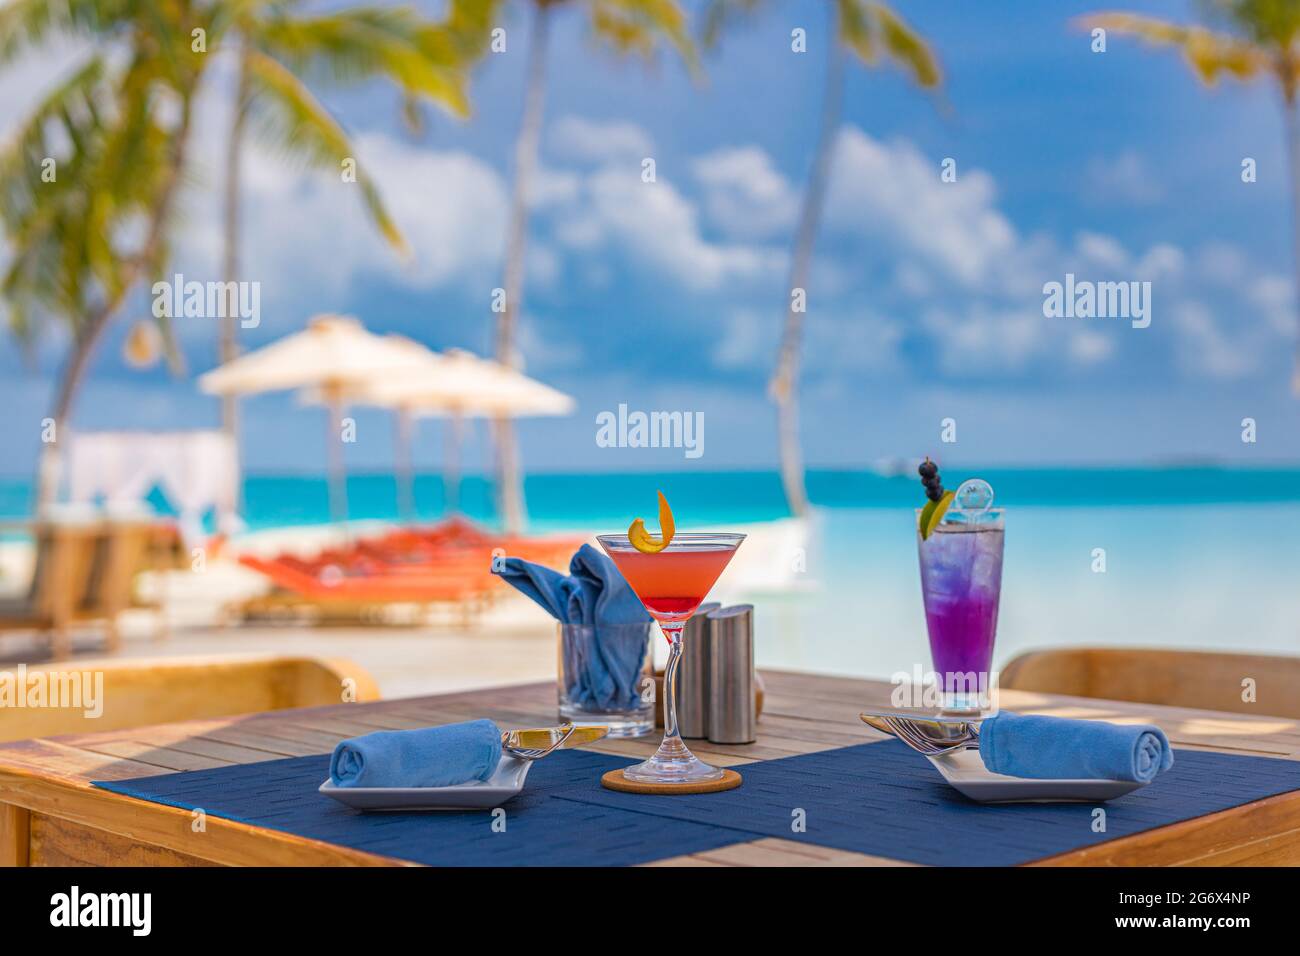 Luxury resort hotel poolside, outdoor restaurant on the beach, ocean ...